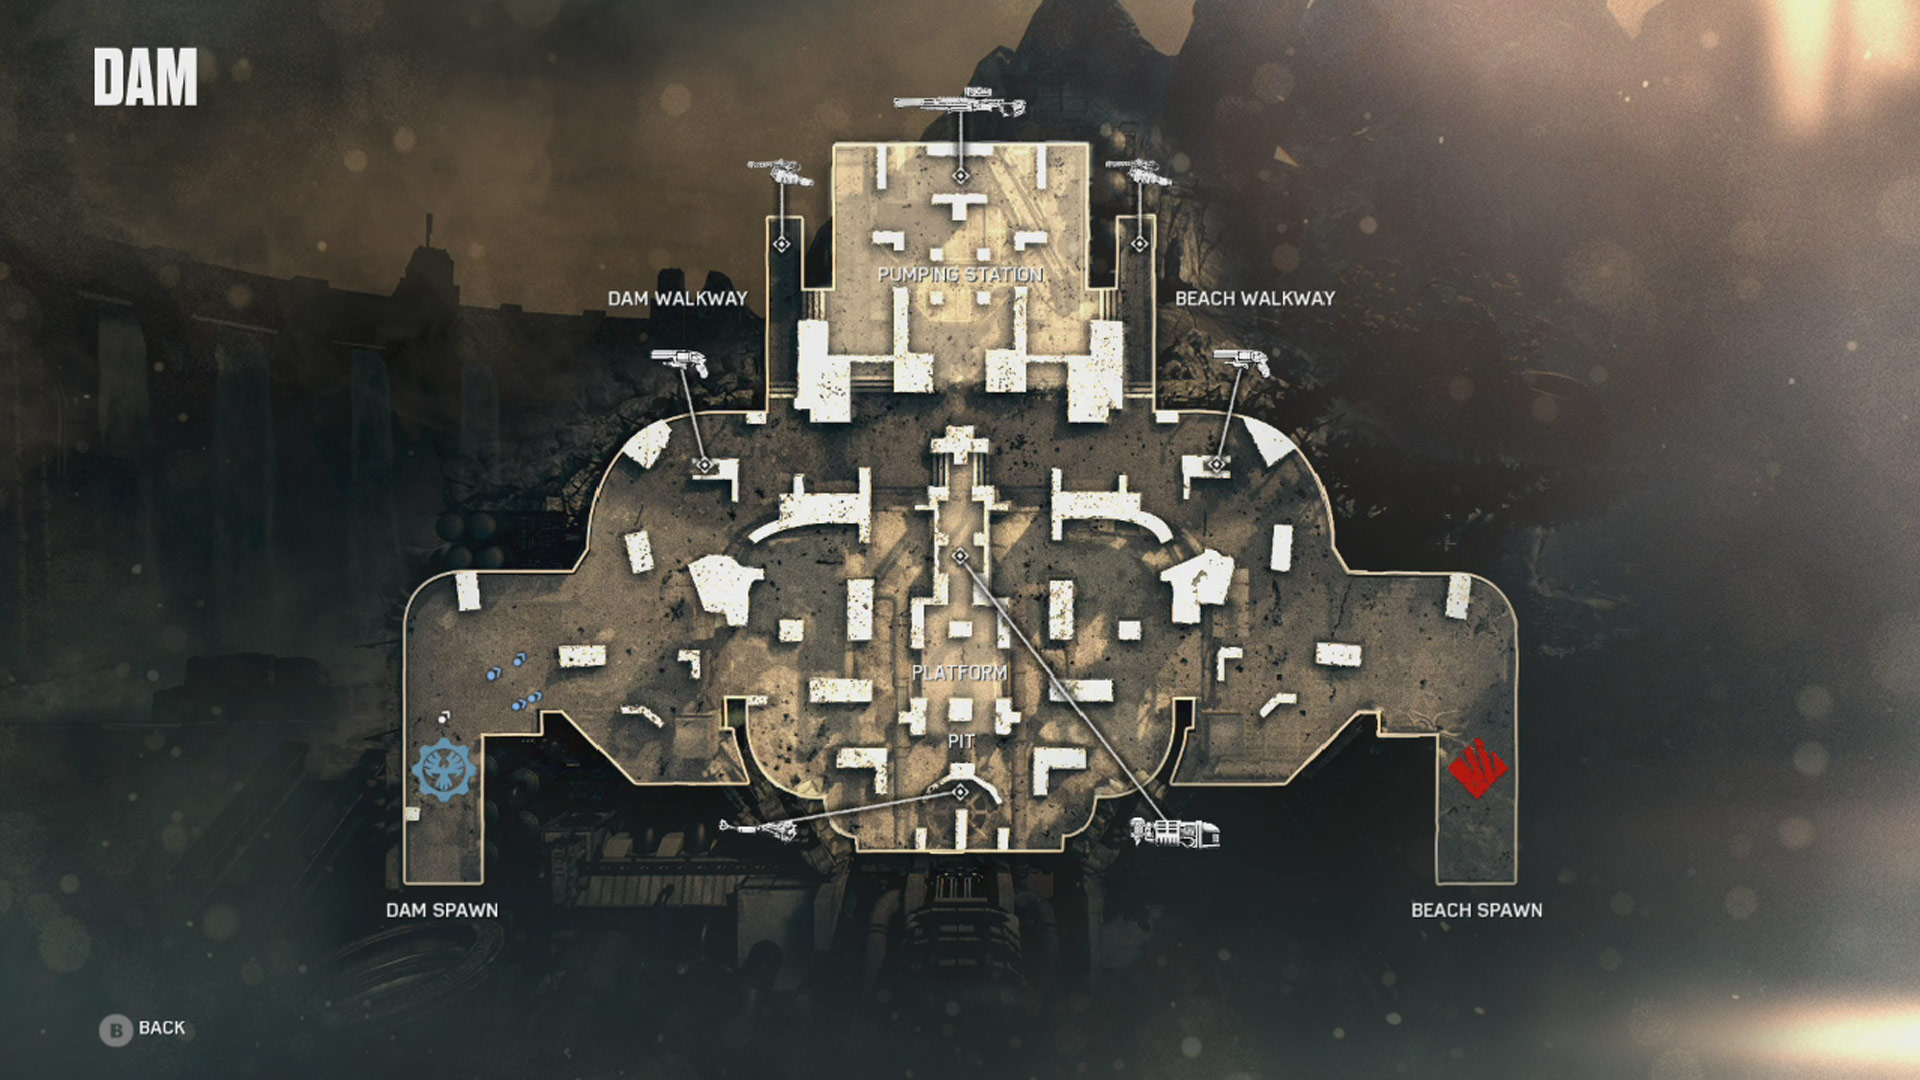 Gears of War 4' Multiplayer Guide